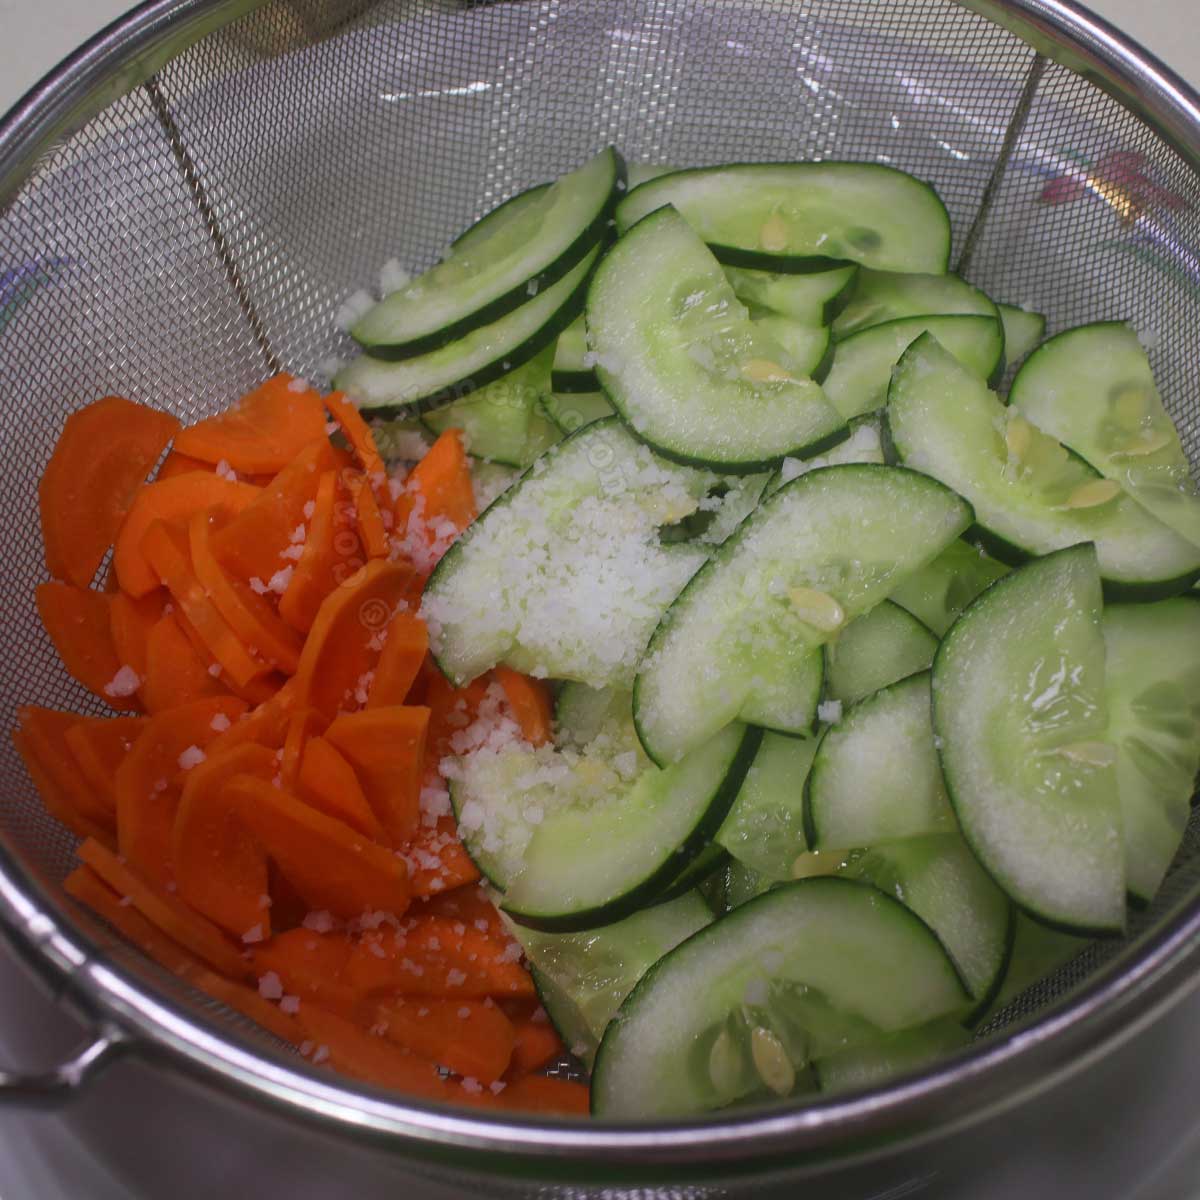 Sliced carrot and cucumber sprinkled with salt in colander